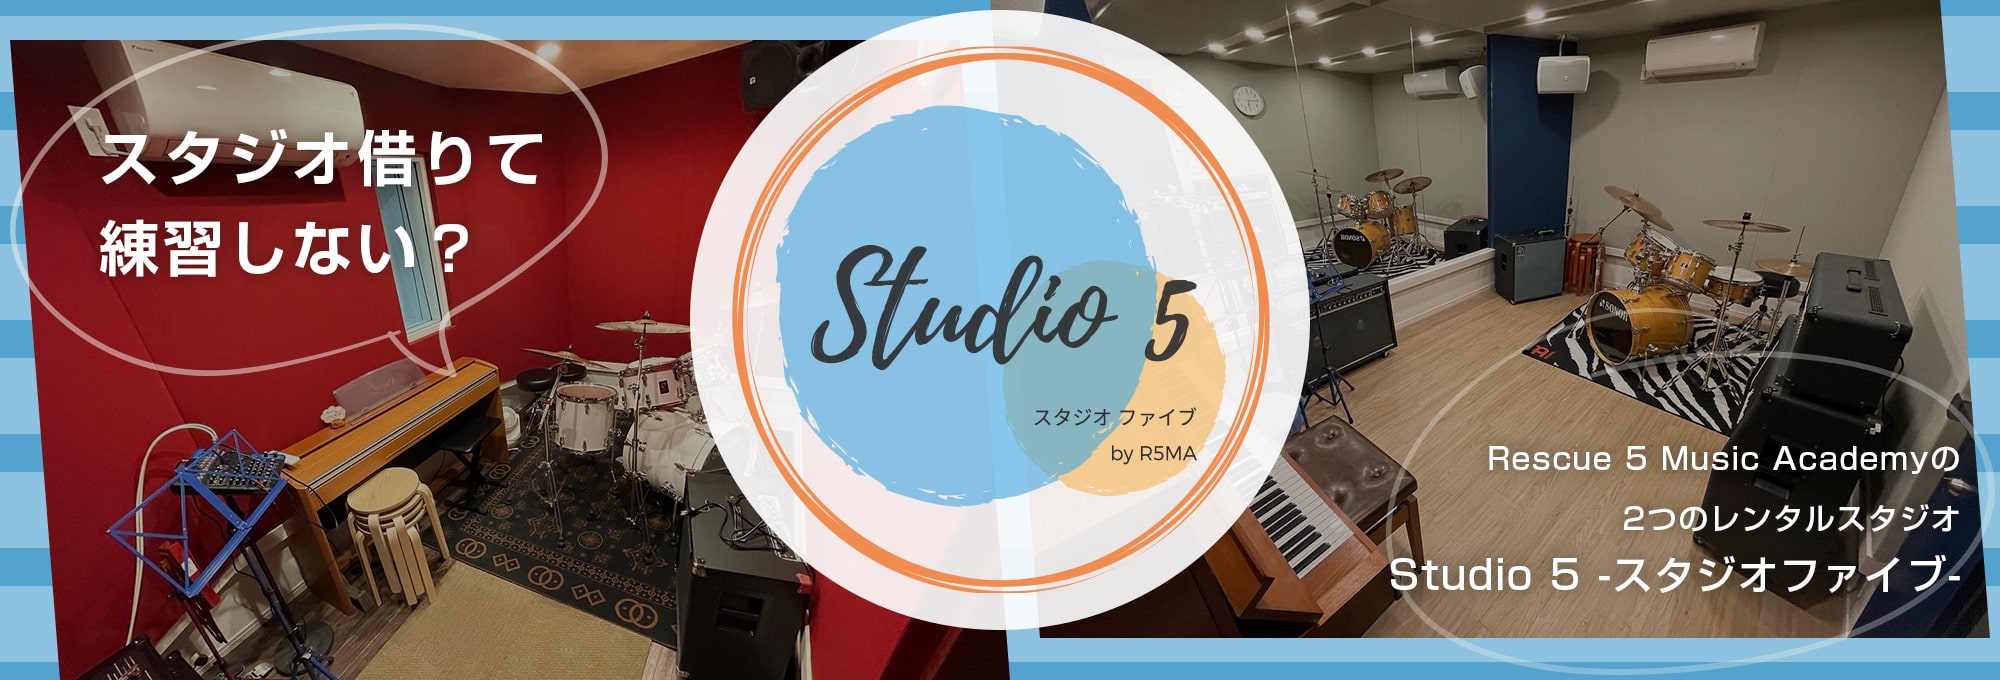 R5MAの2つのレンタルスタジオ Studio 5 -スタジオファイブ-